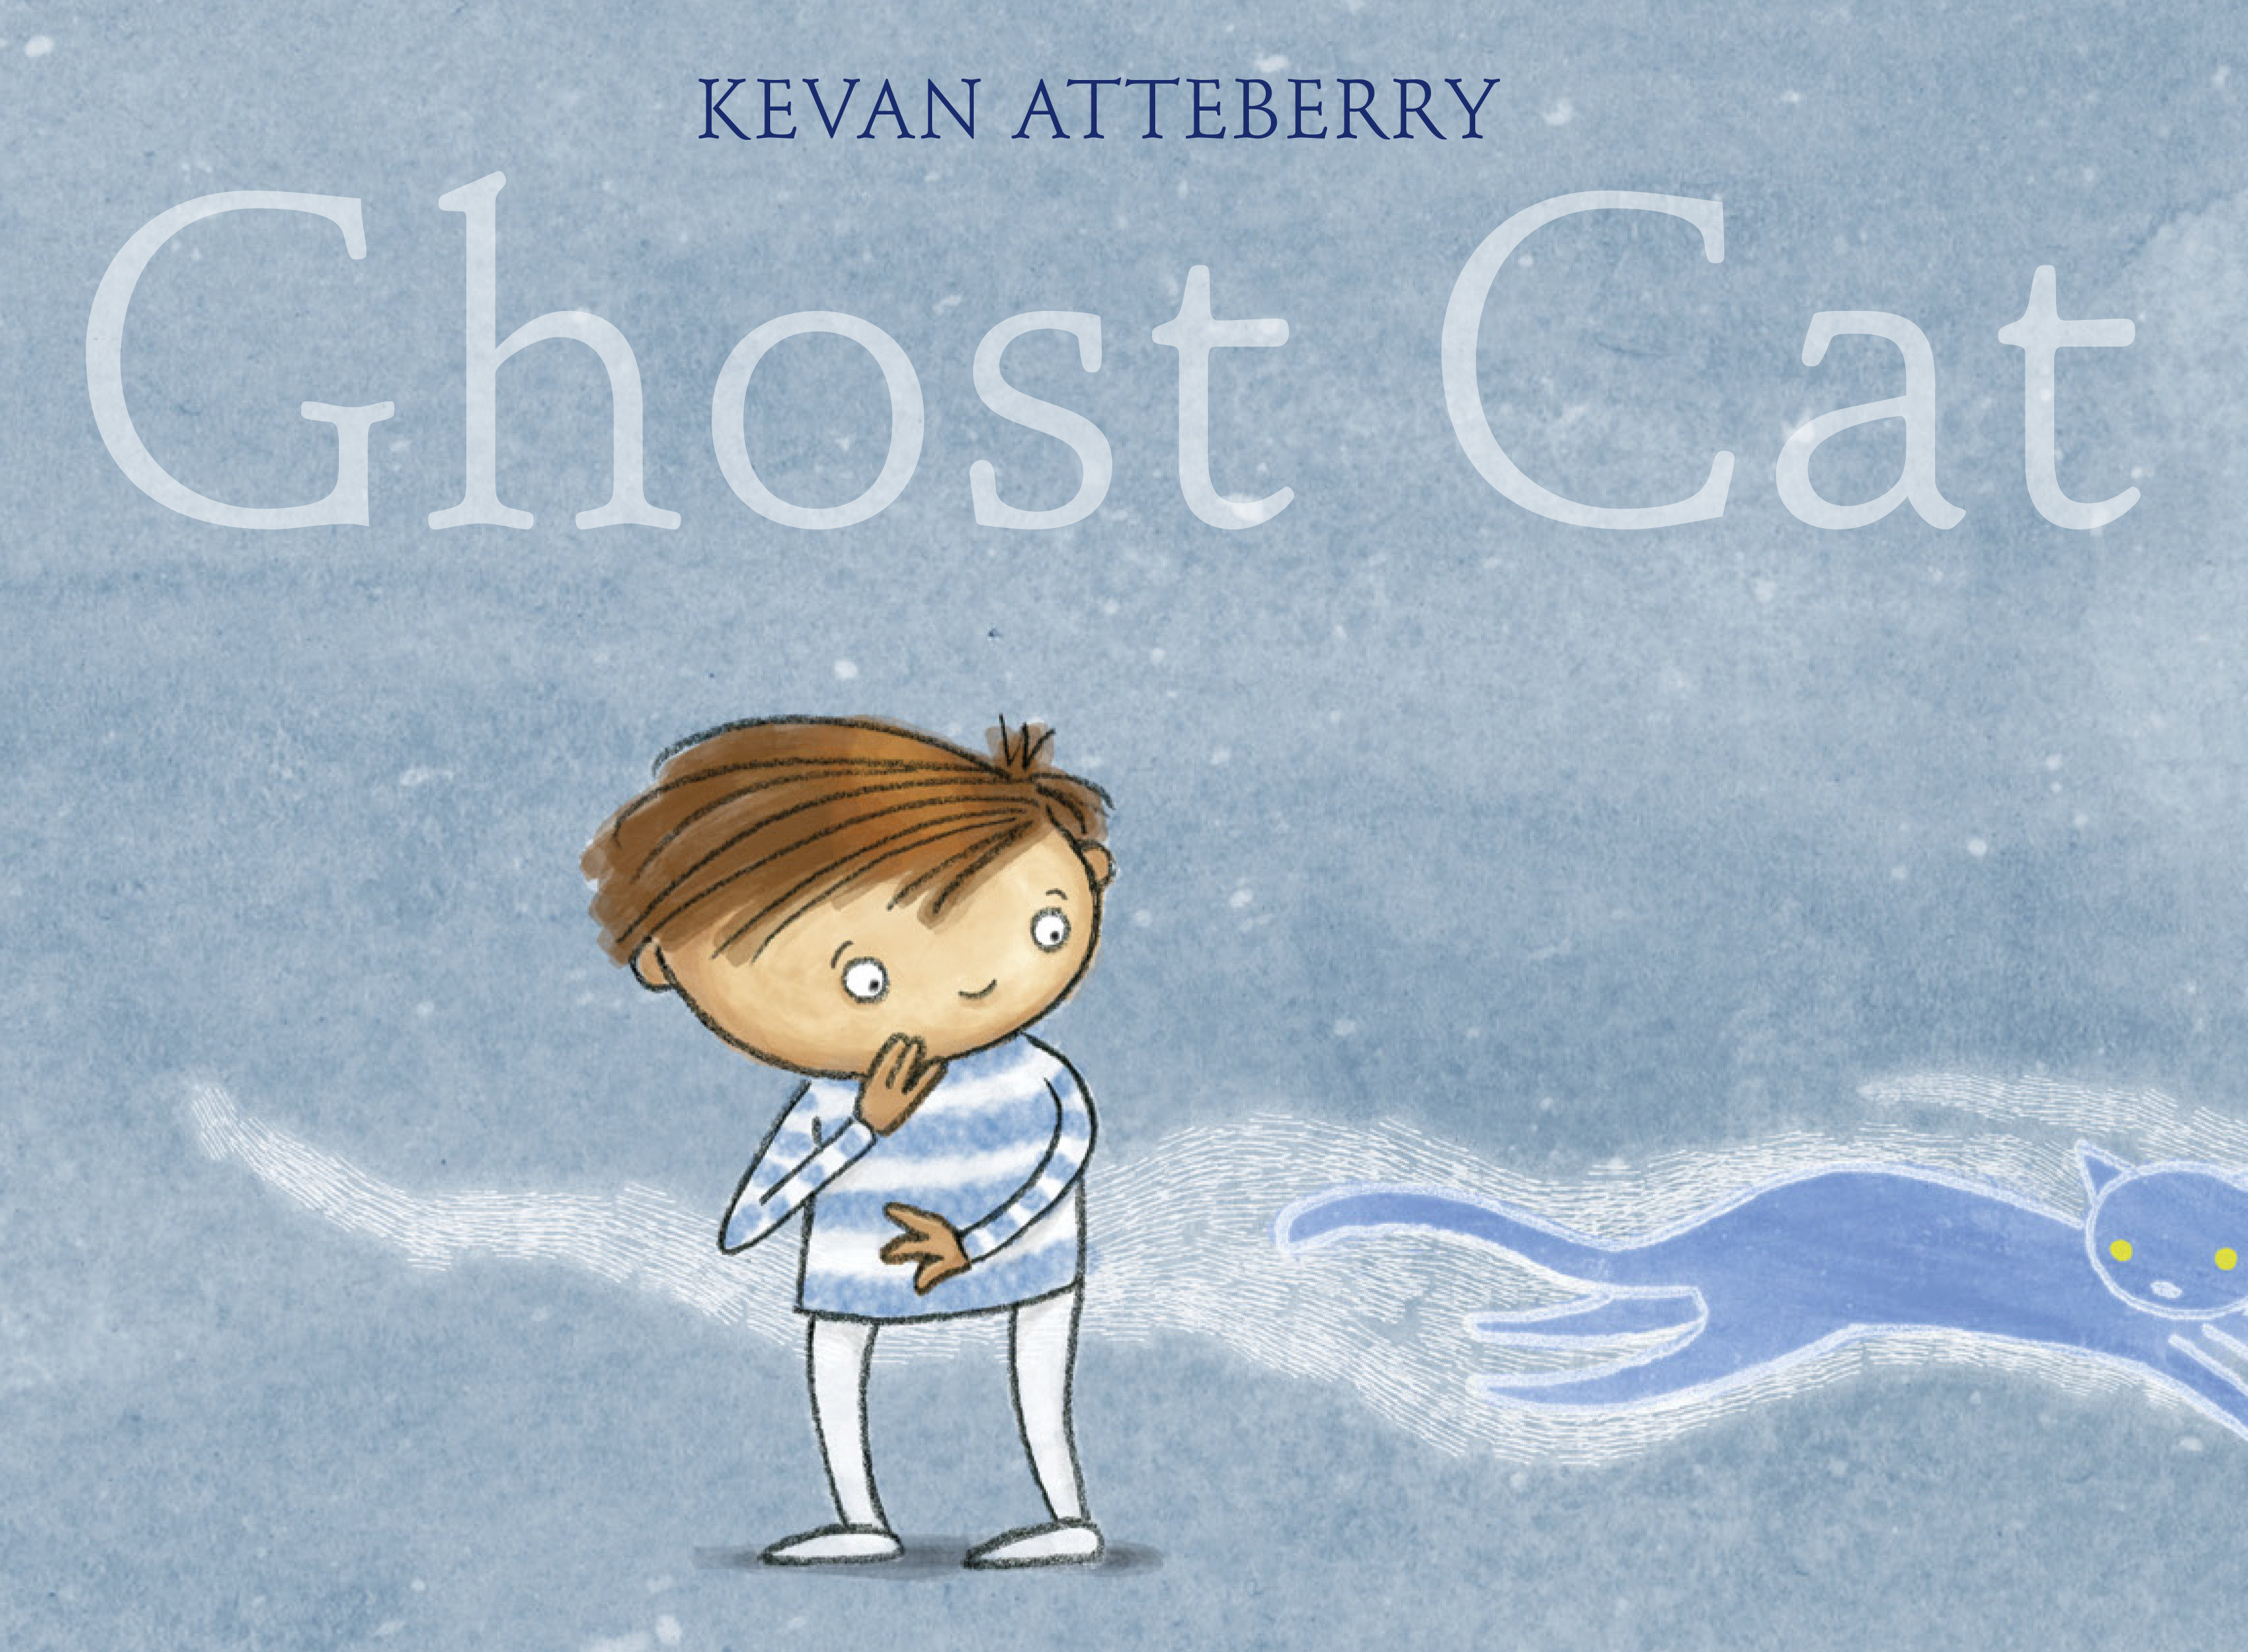 Ghost Cat (Hardcover Book)